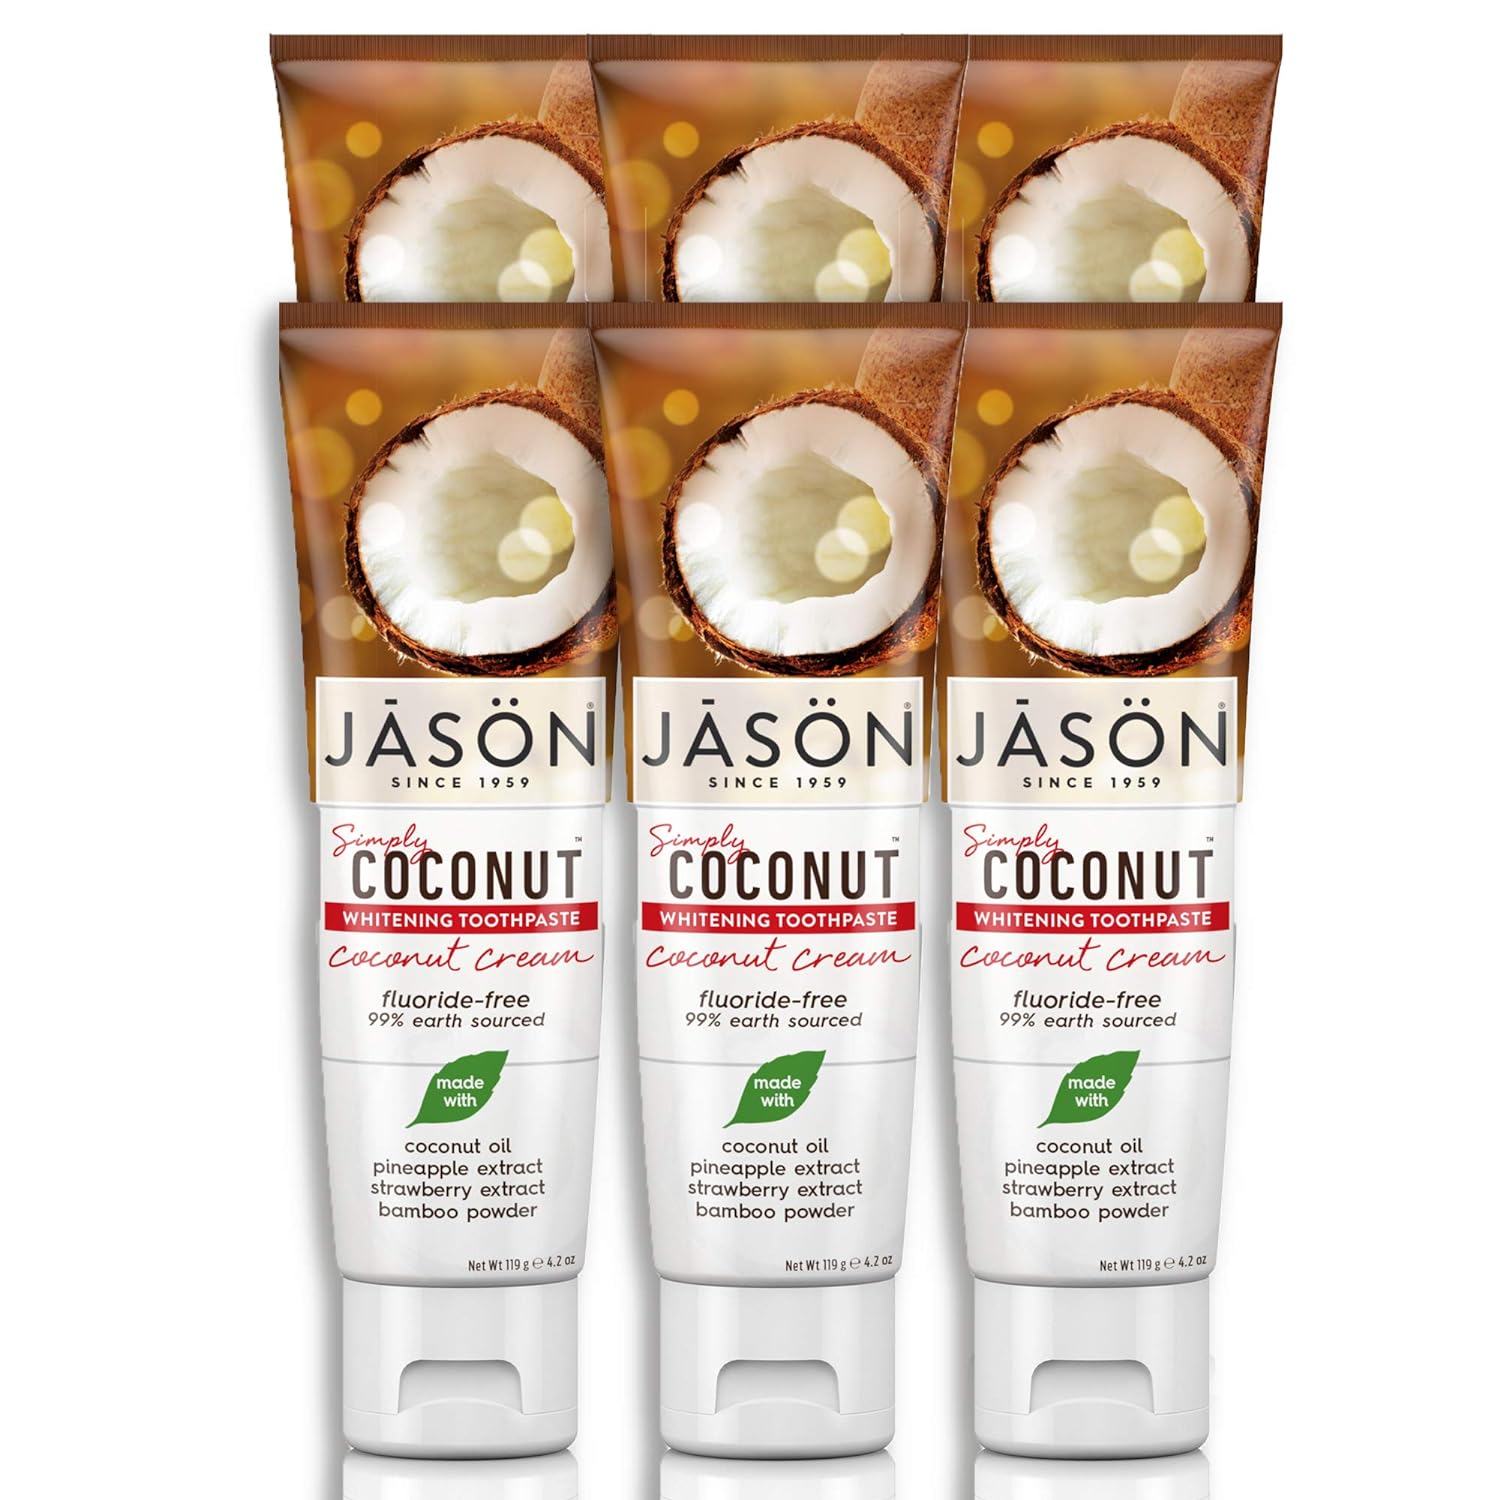 Jason Simply Coconut Whitening Fluoride-Free Toothpaste, Coconut Cream, 4.2 Oz : Health & Household